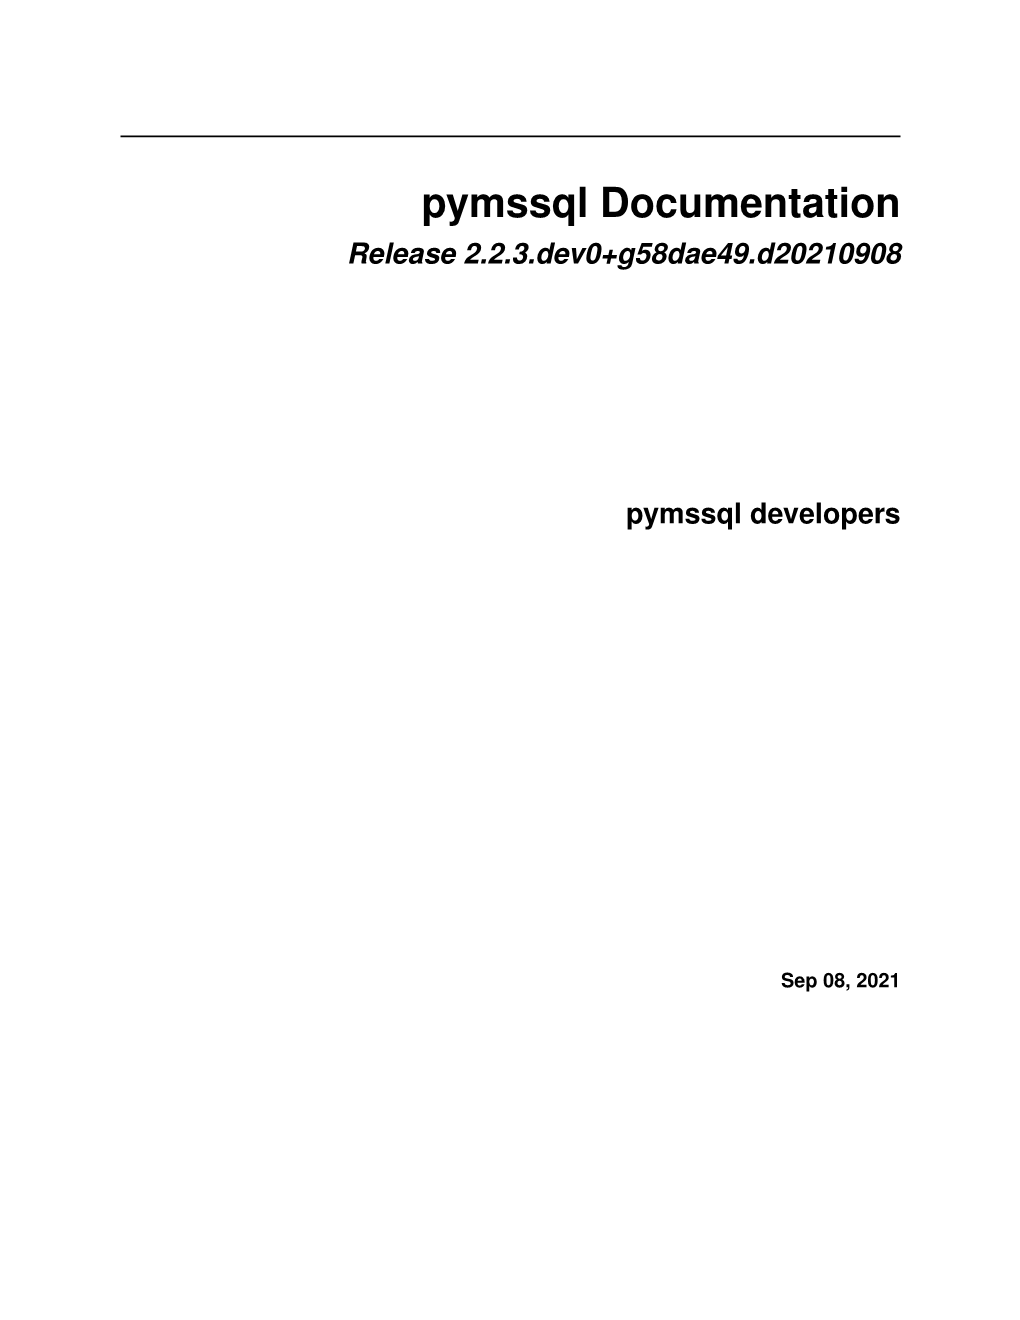 Pymssql Documentation Release 2.2.3.Dev0+G58dae49.D20210908